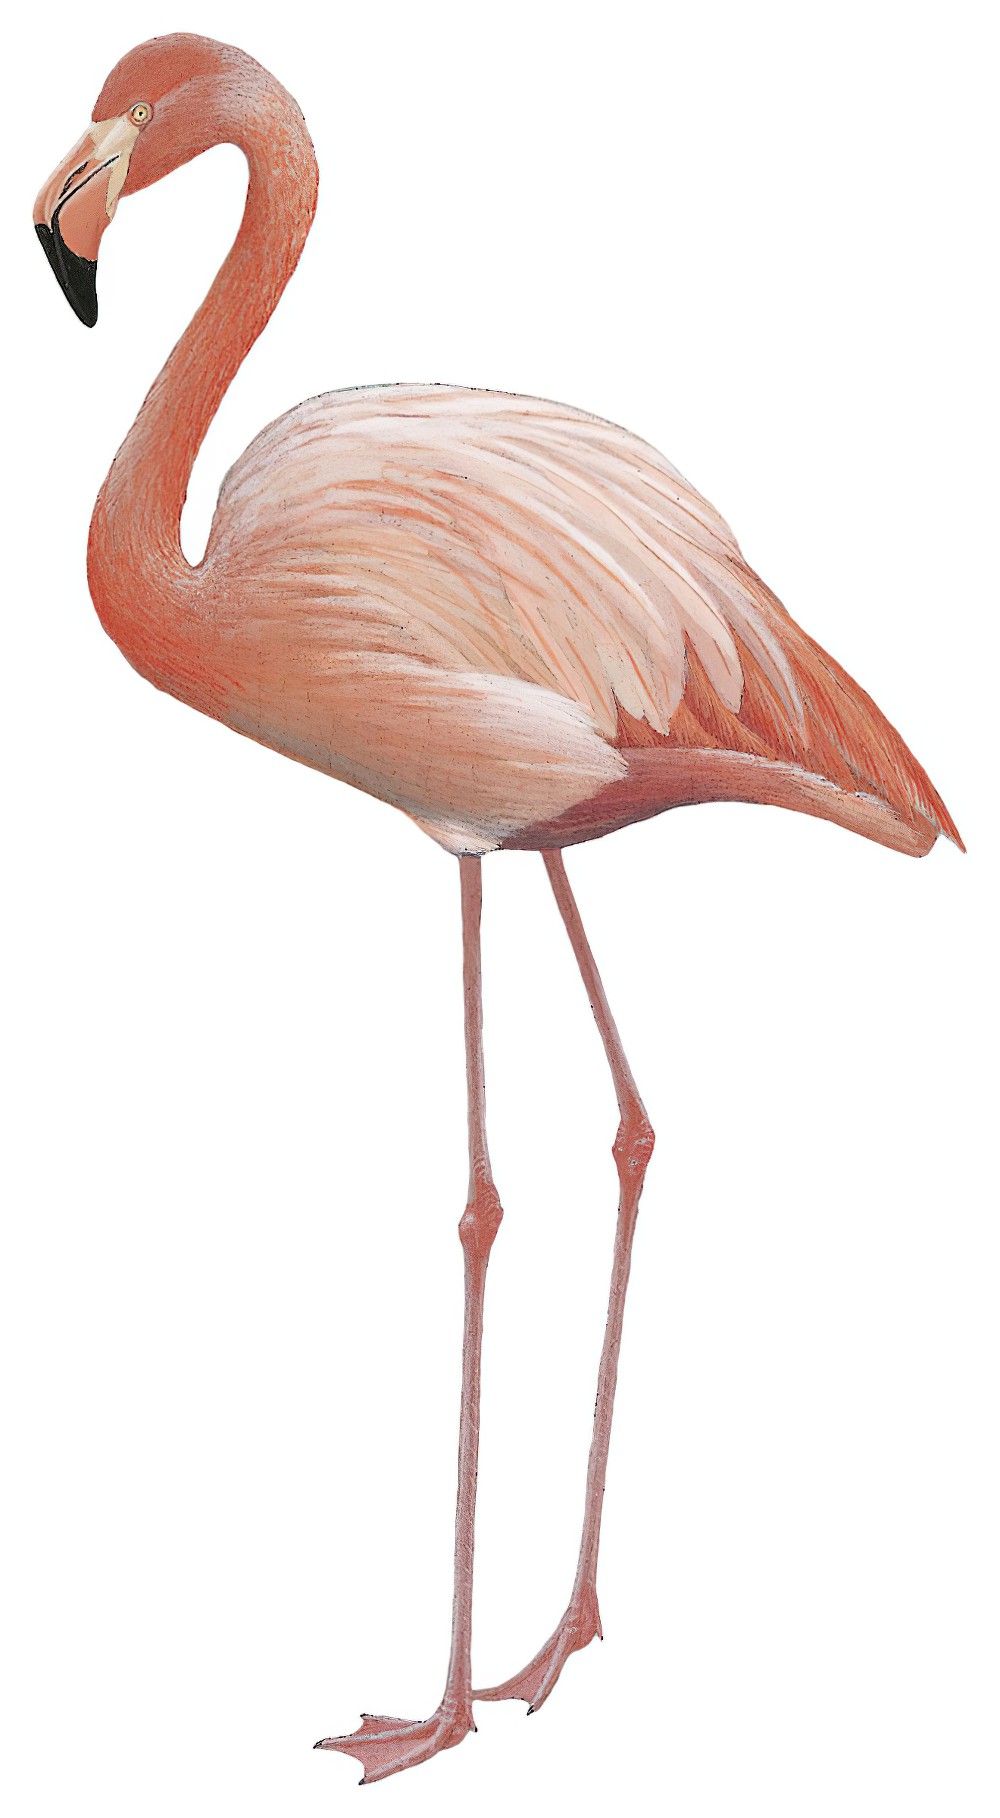 American Flamingo / Phoenicopterus ruber